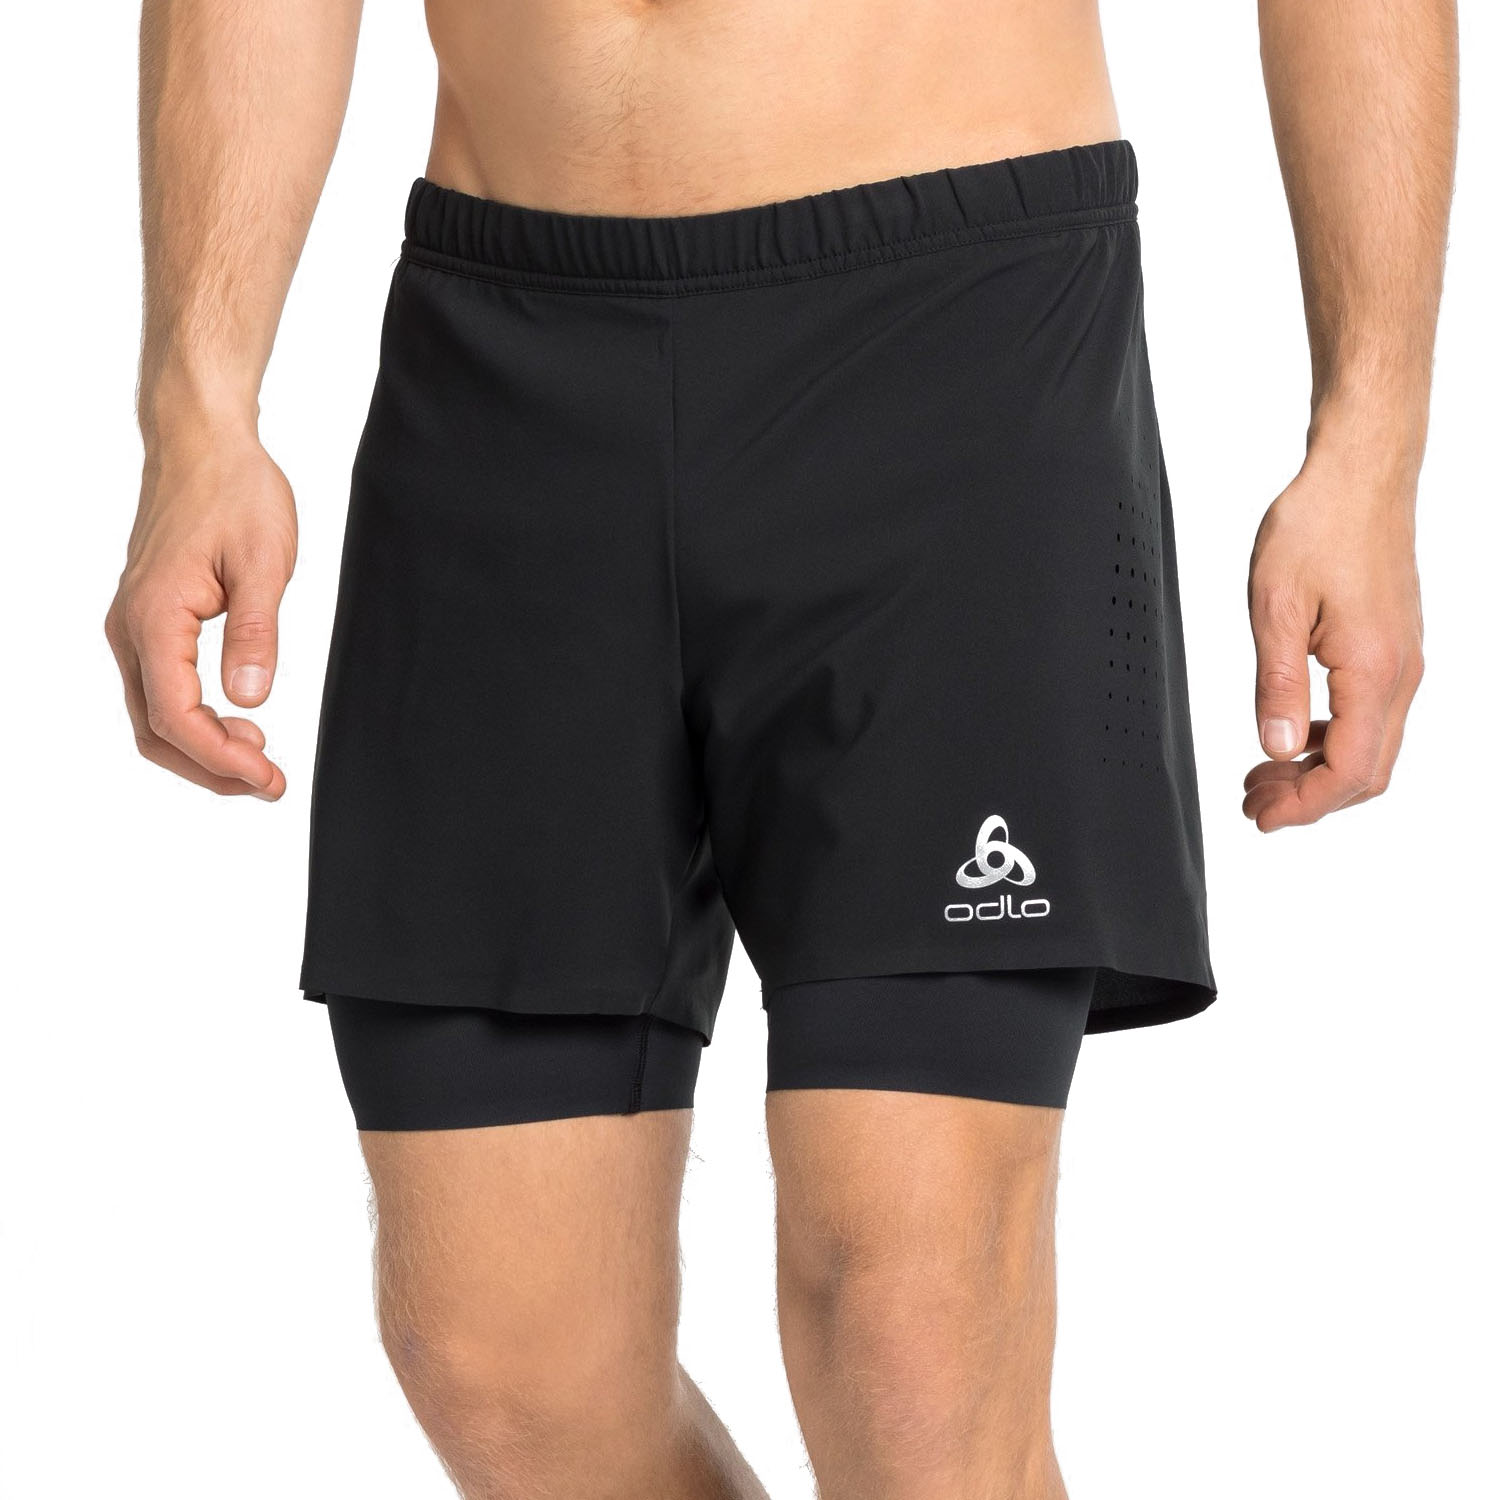 Odlo Zeroweight 2 In 1 5in Shorts - Black